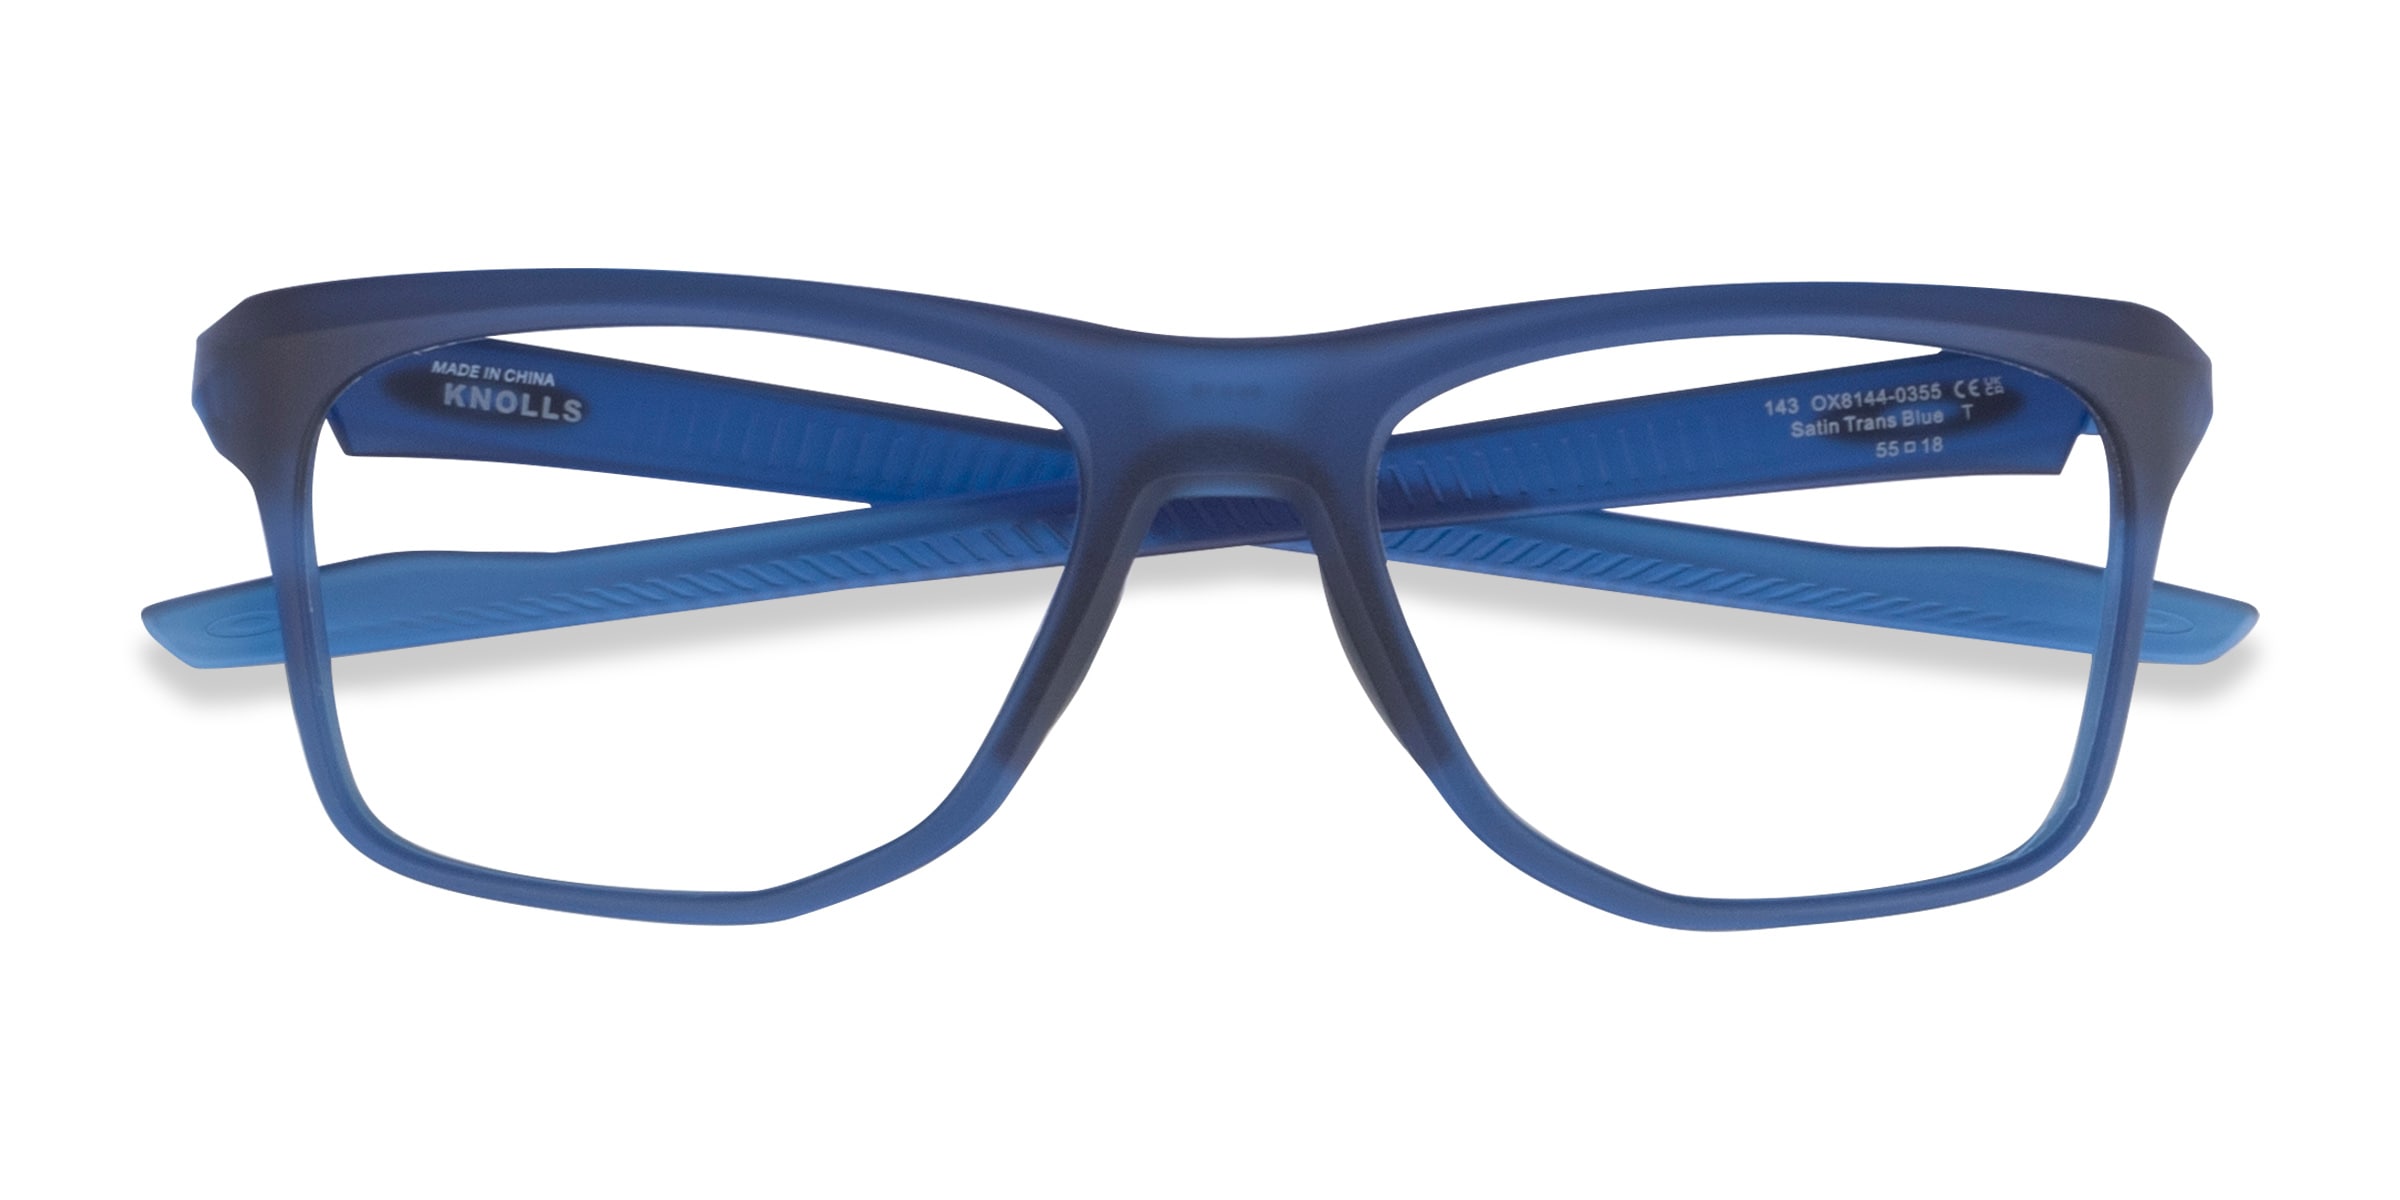 Oakley Knolls - Square Satin Blue Frame Eyeglasses | Eyebuydirect Canada